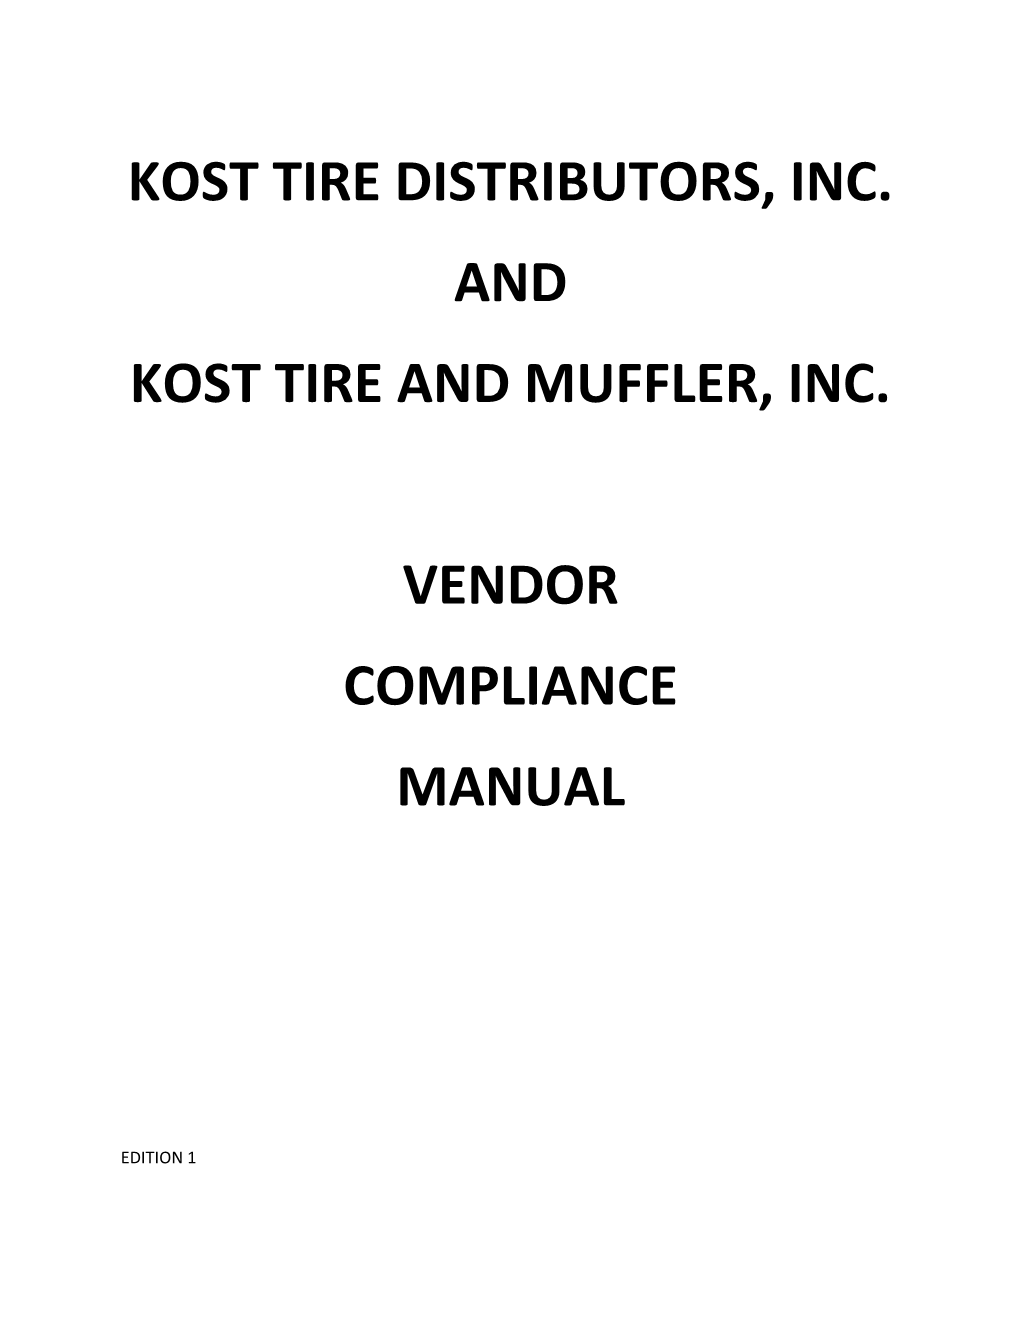 Kost Tire Distributors, Inc